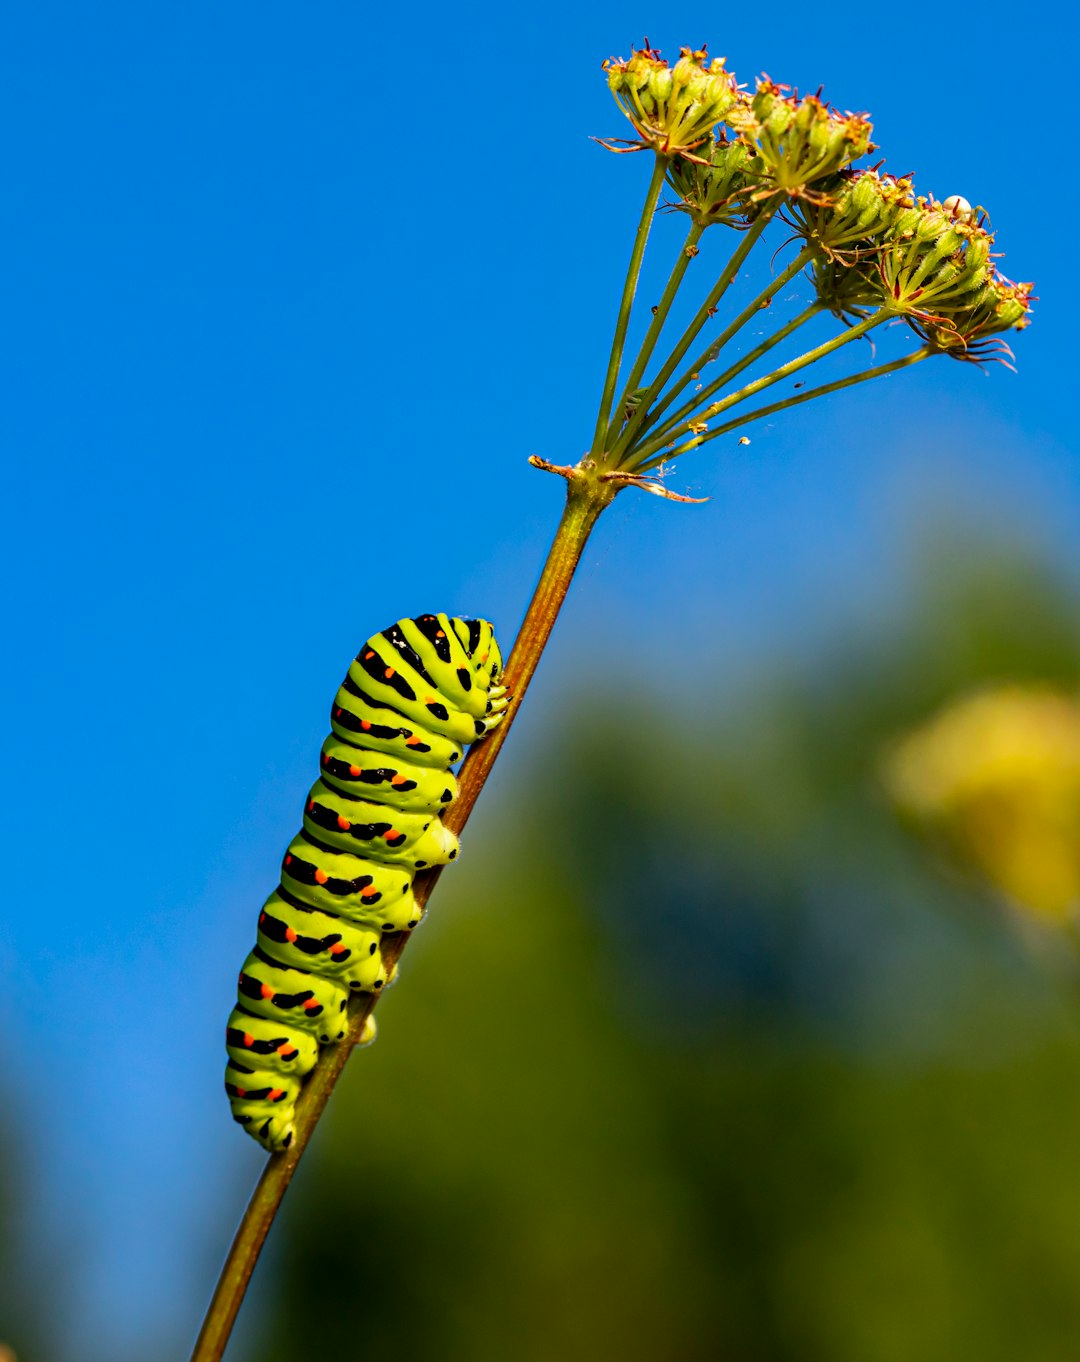 yellow and black caterpillar on brown stem